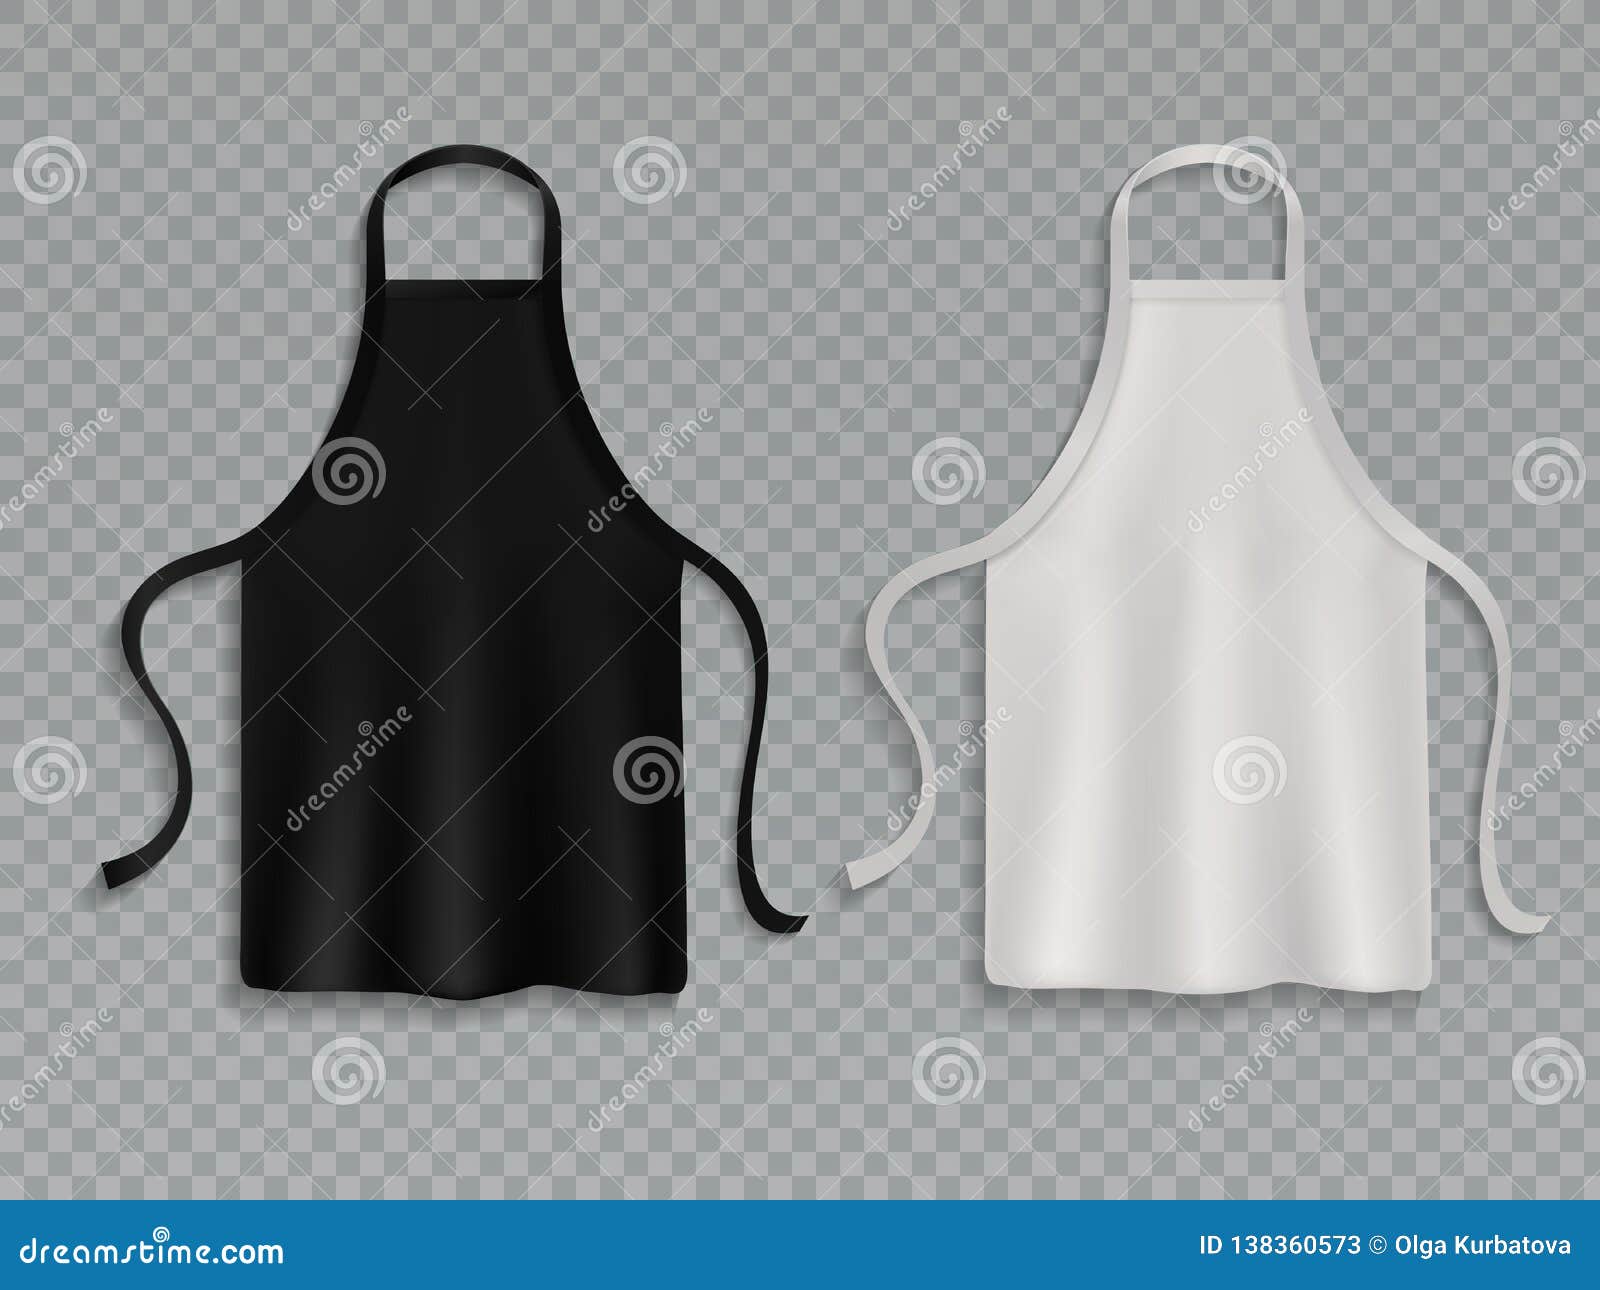 chef apron. black white culinary cloth aprons chef uniform kitchen cotton cooking clothes   mockup